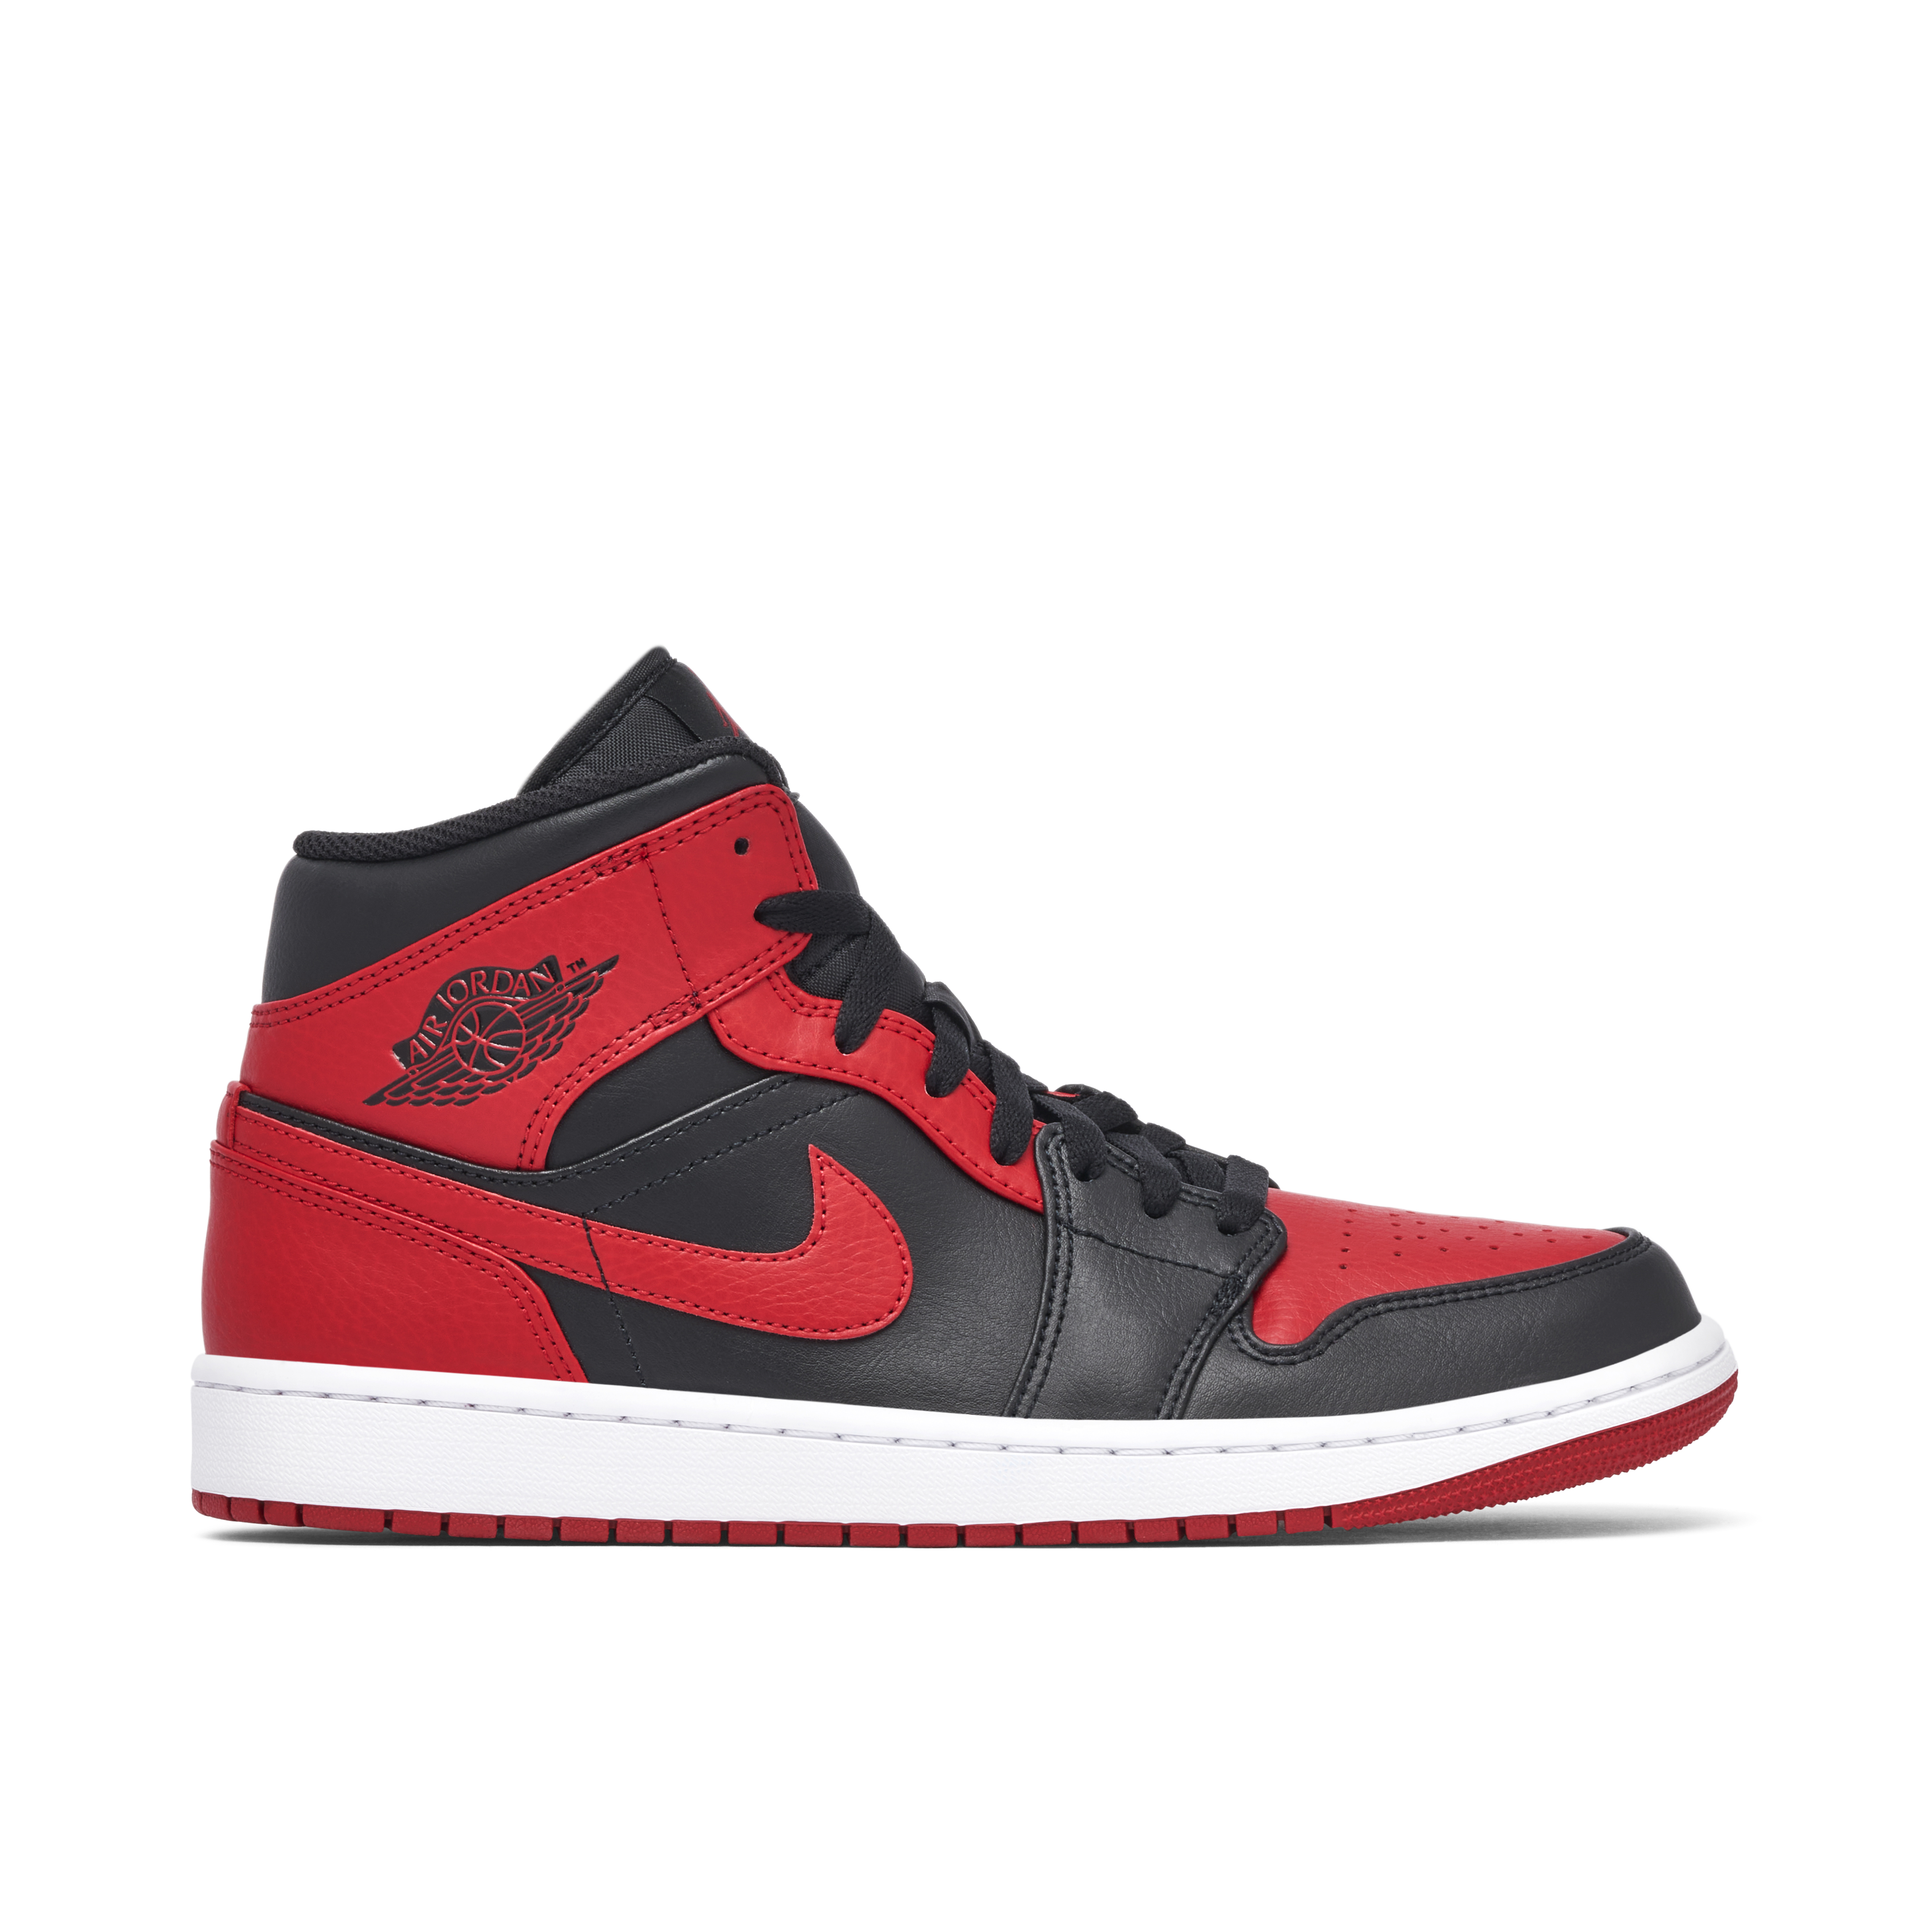 kraan Commandant Boom Red Jordans | New Red Air Jordan Trainers from Nike